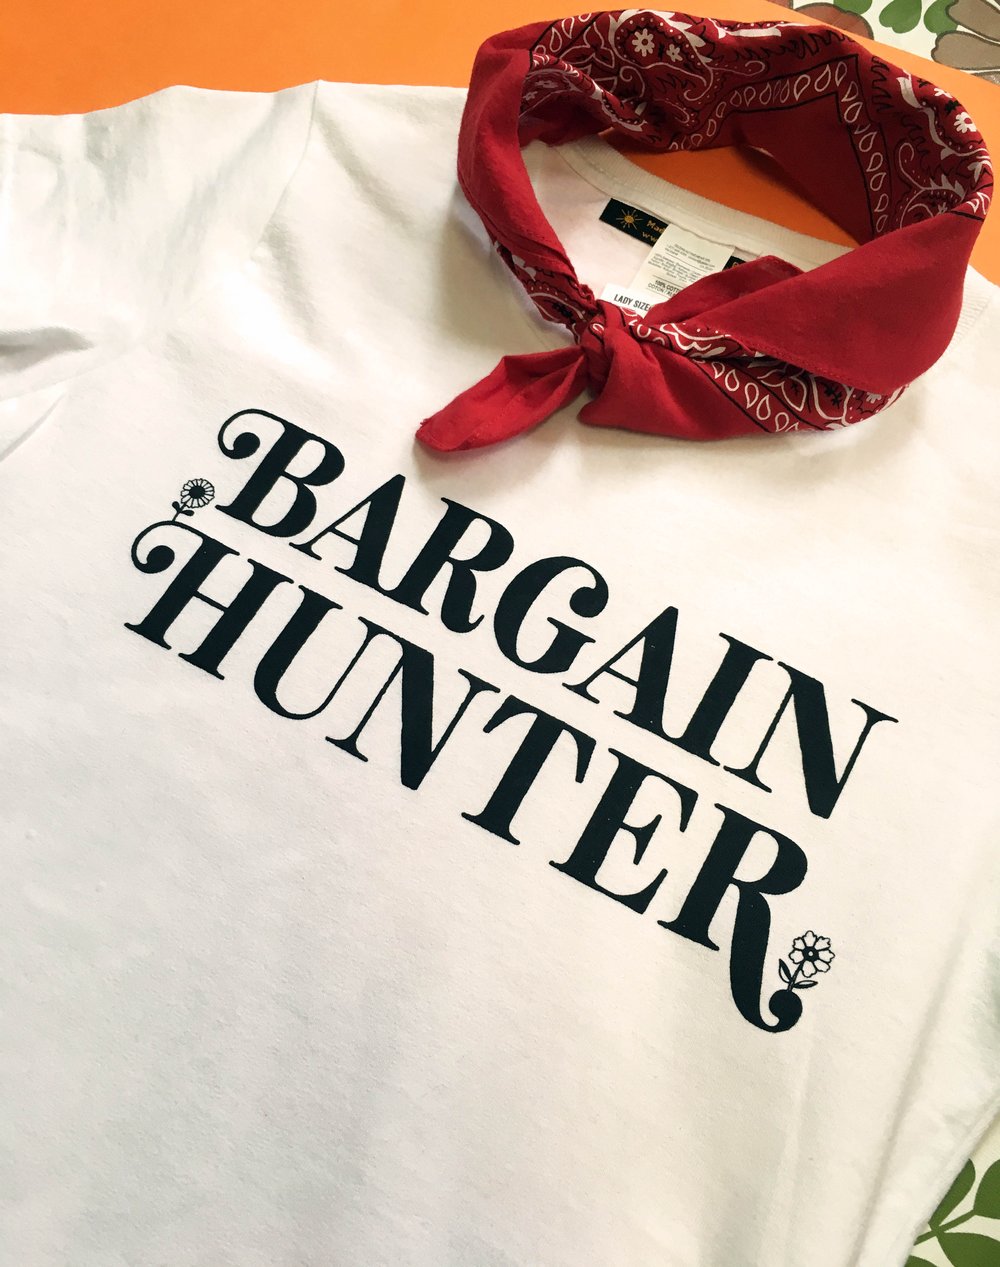 Bargain Hunter Tee - Ladies